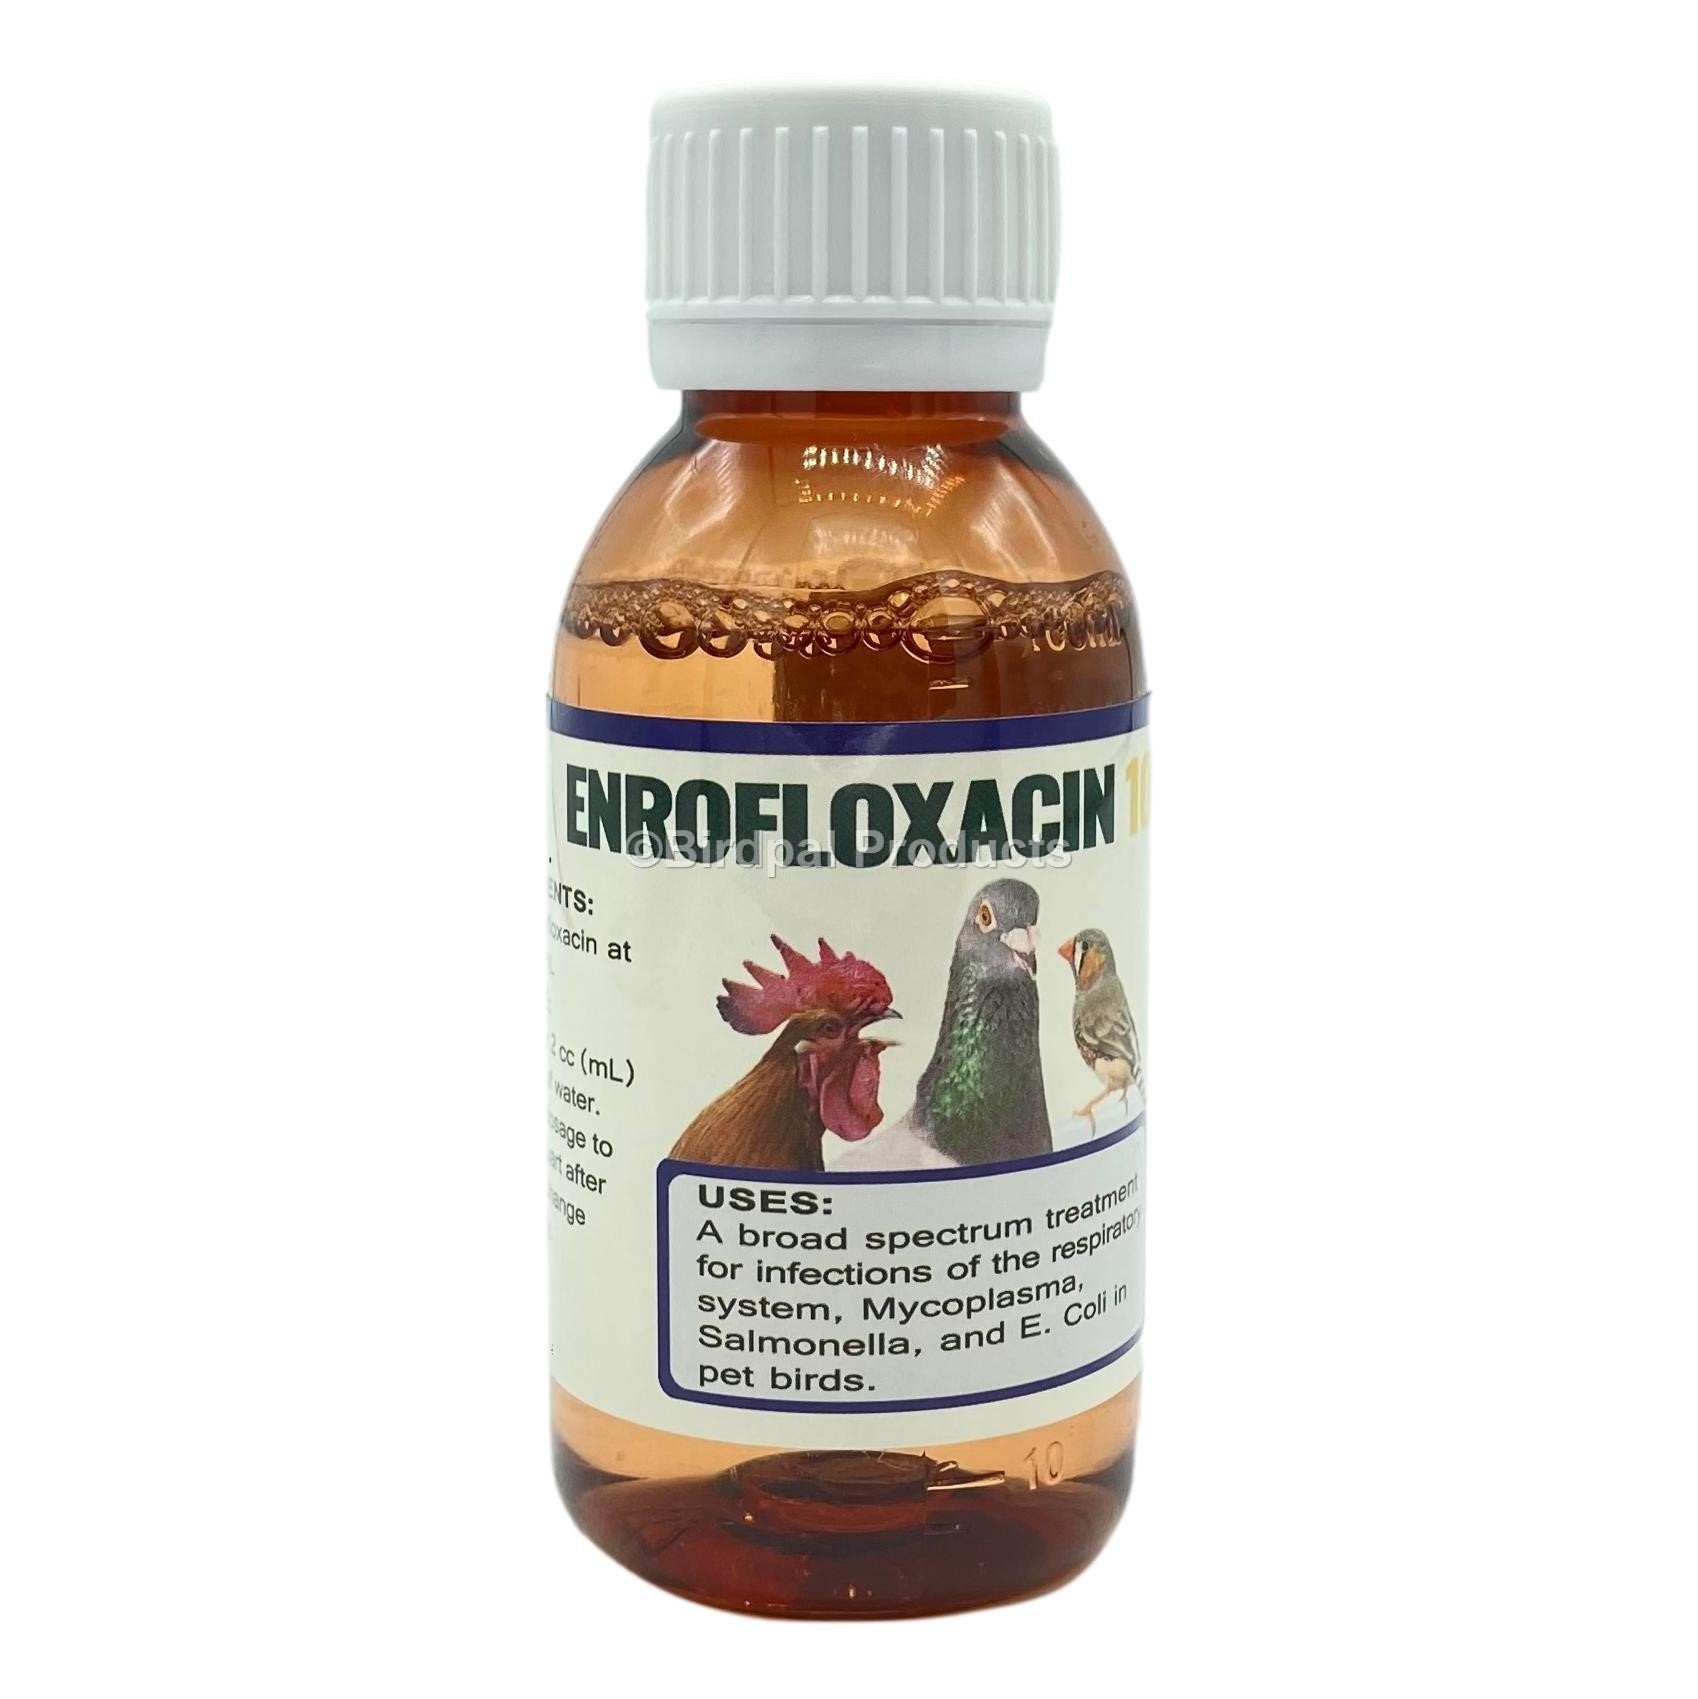 Enrofloxacin 10% - Enrofloxacin for Birds